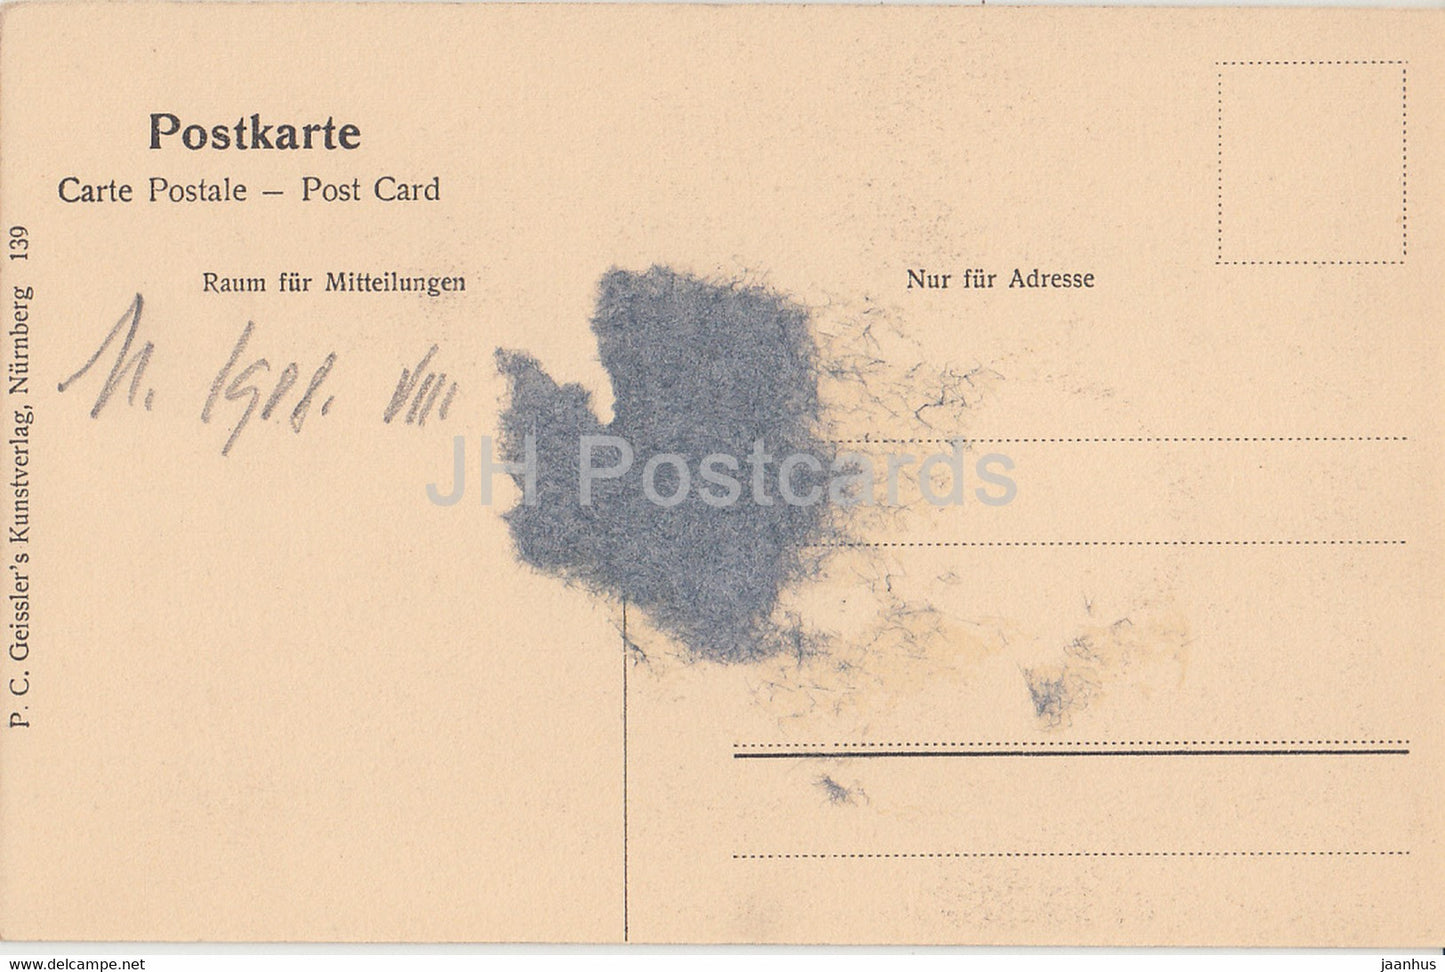 Nurnberg - Germanisches Museum - Wasserhof - old postcard - 1908 - Germany - unused